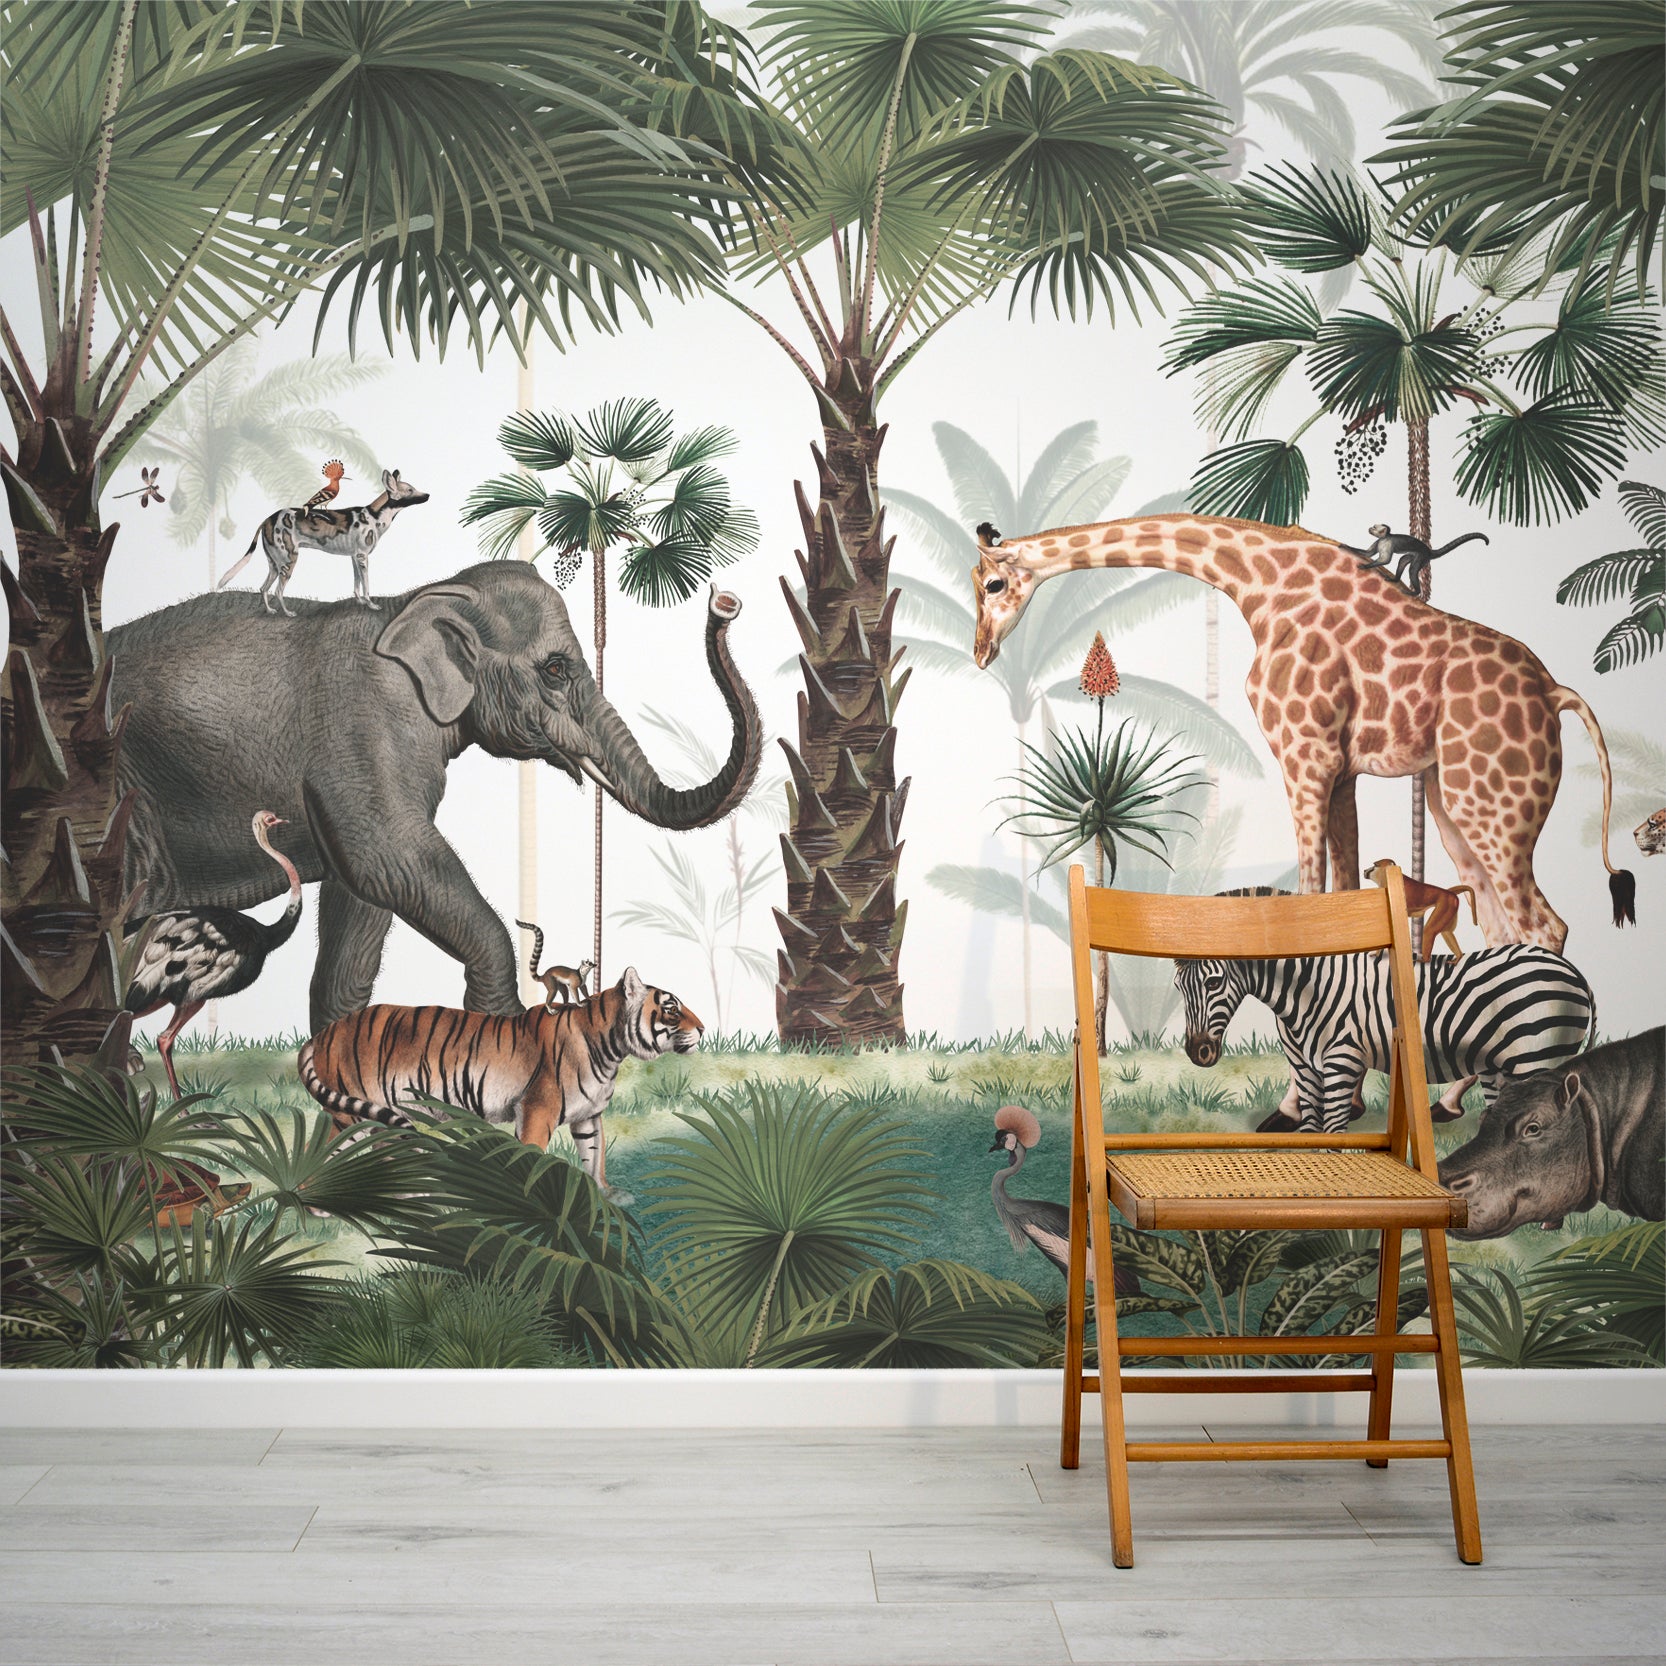 Minimalistic Animal Wallpaper Wild Safari Animals Peel and Stick Wallpaper Kids Animal Themed Removable Wallpaper